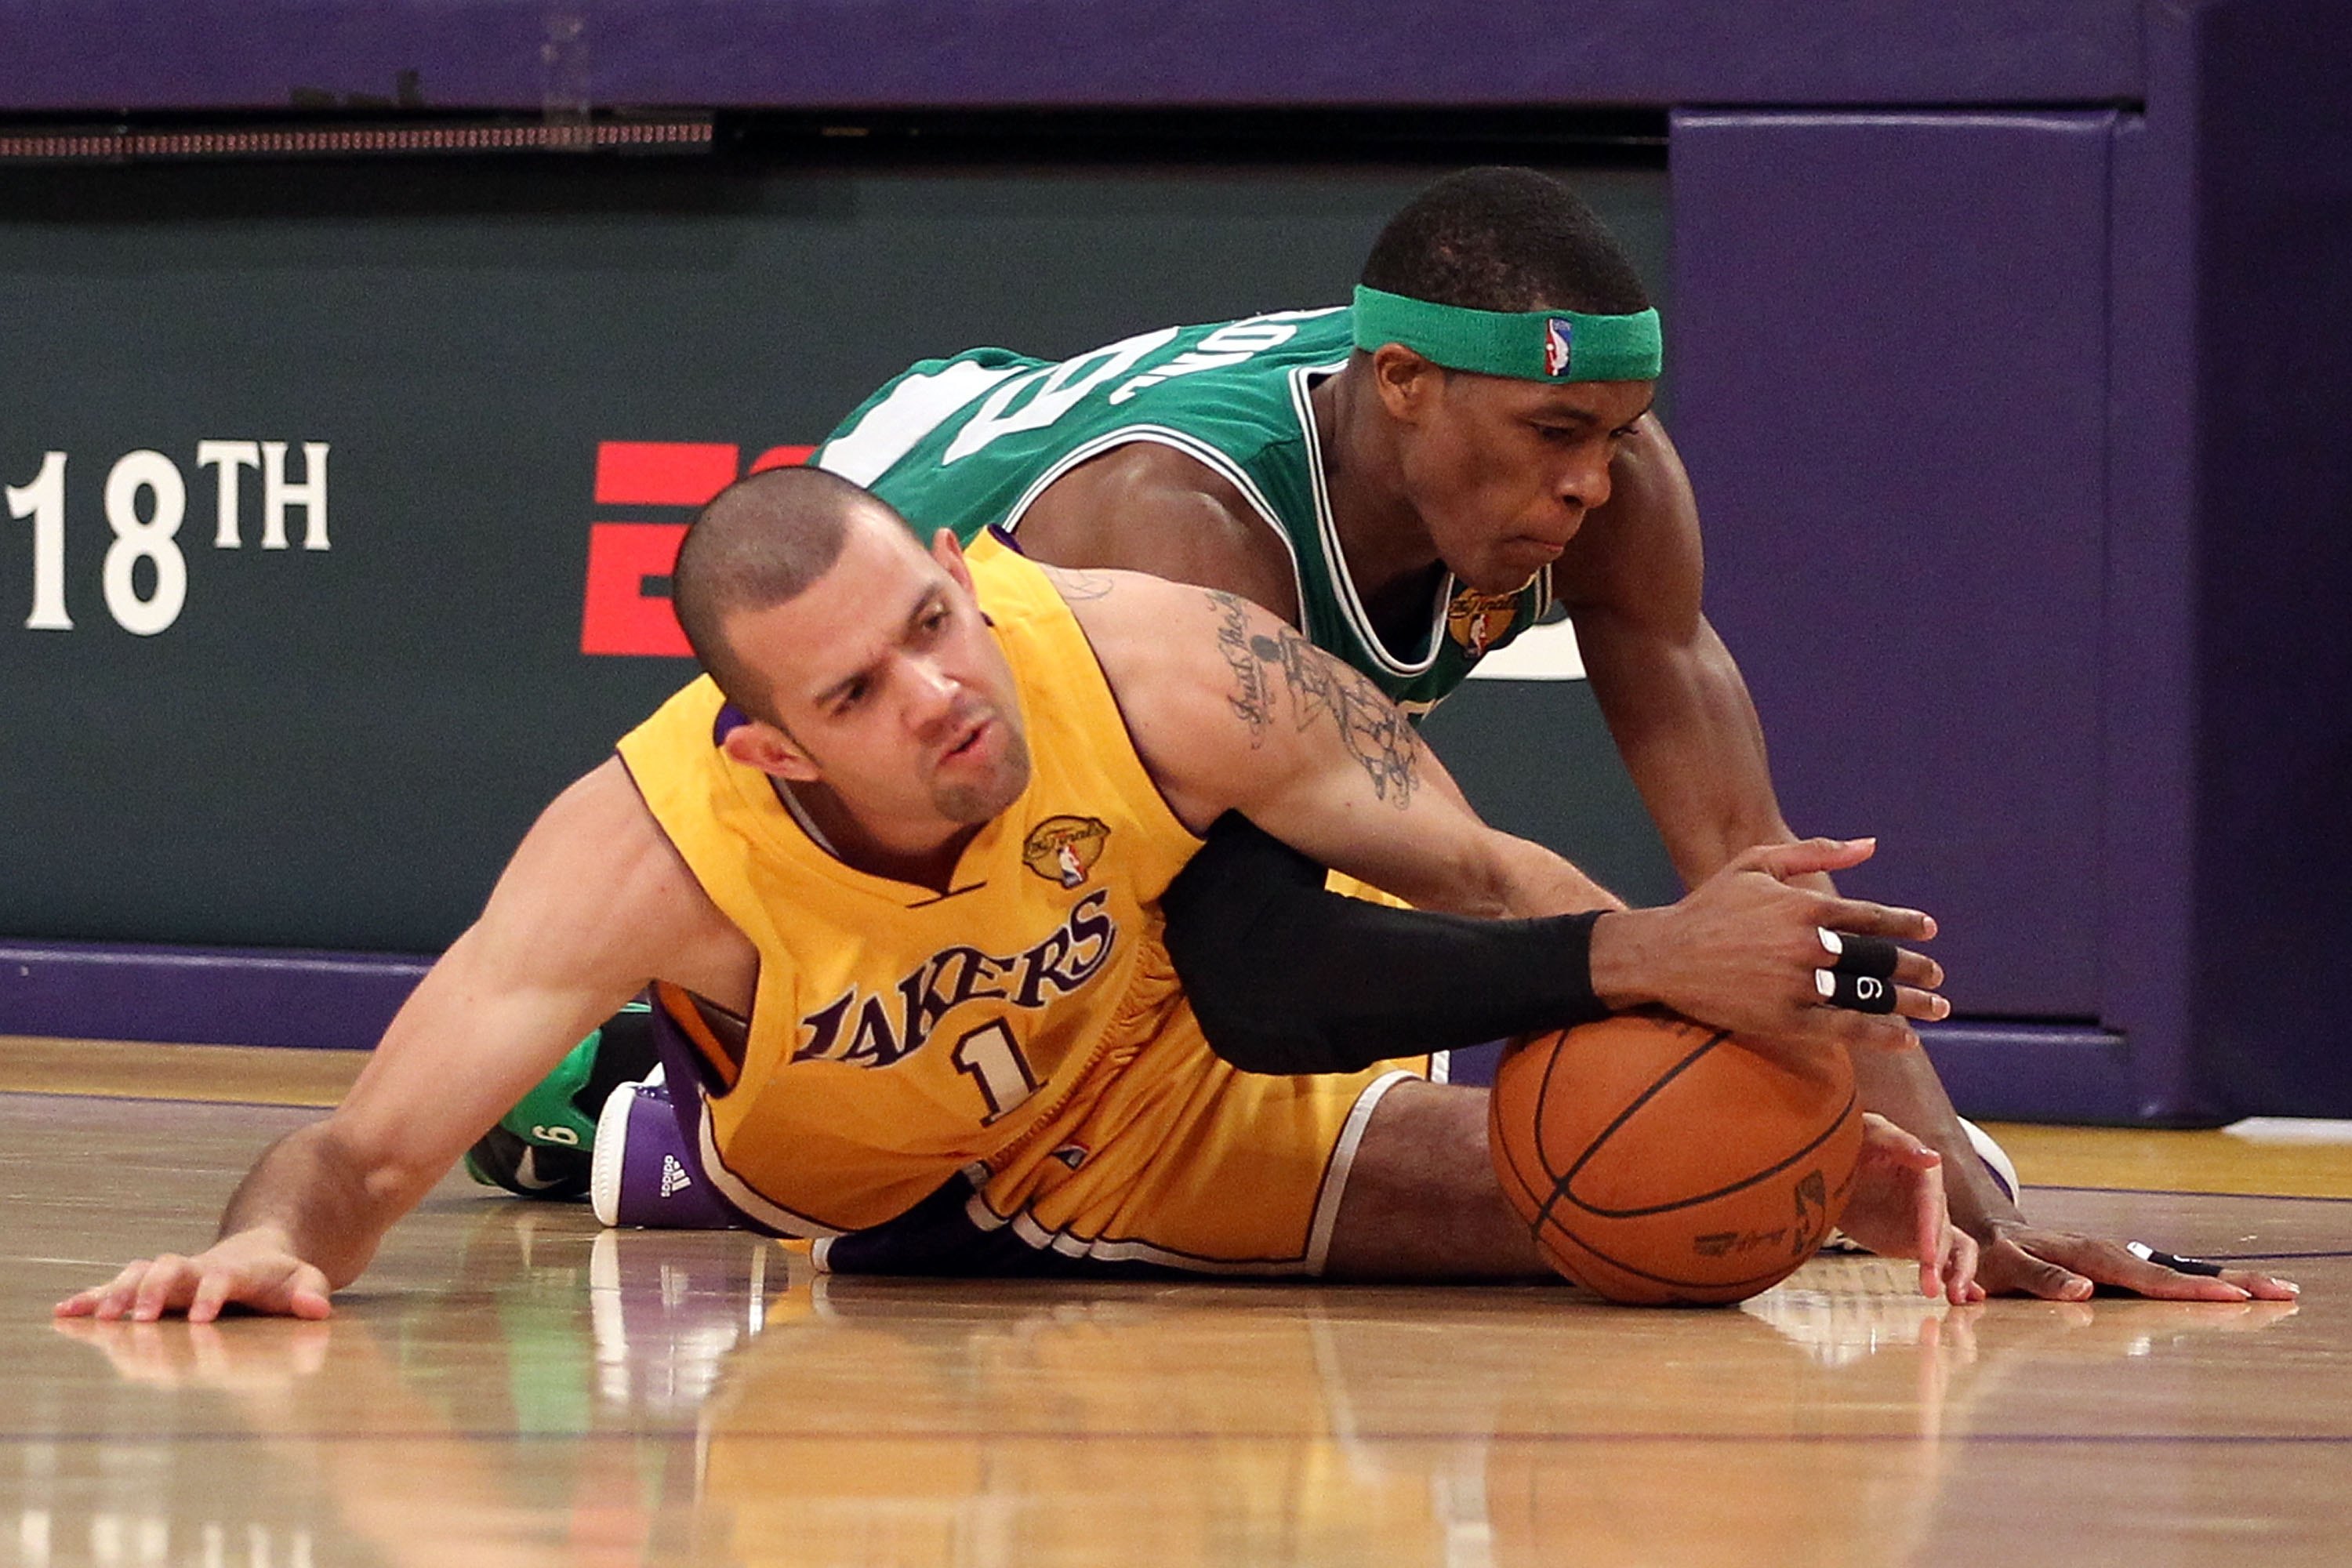 Jordan Farmar returns to the Lakers